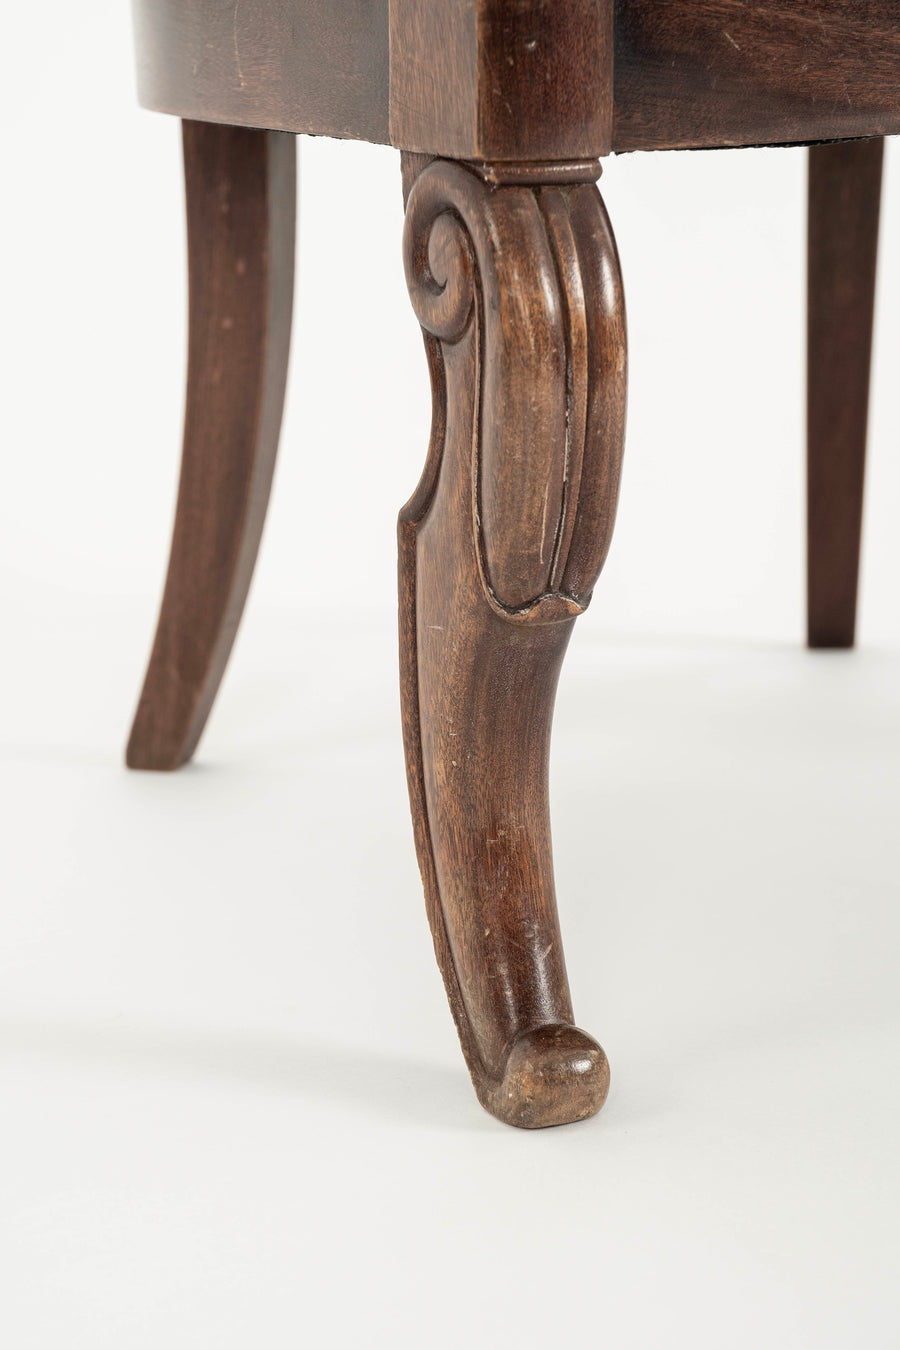 Pair Neoclassical Style Johnson Hartig Libertine Hotch Potch Swan Chairs